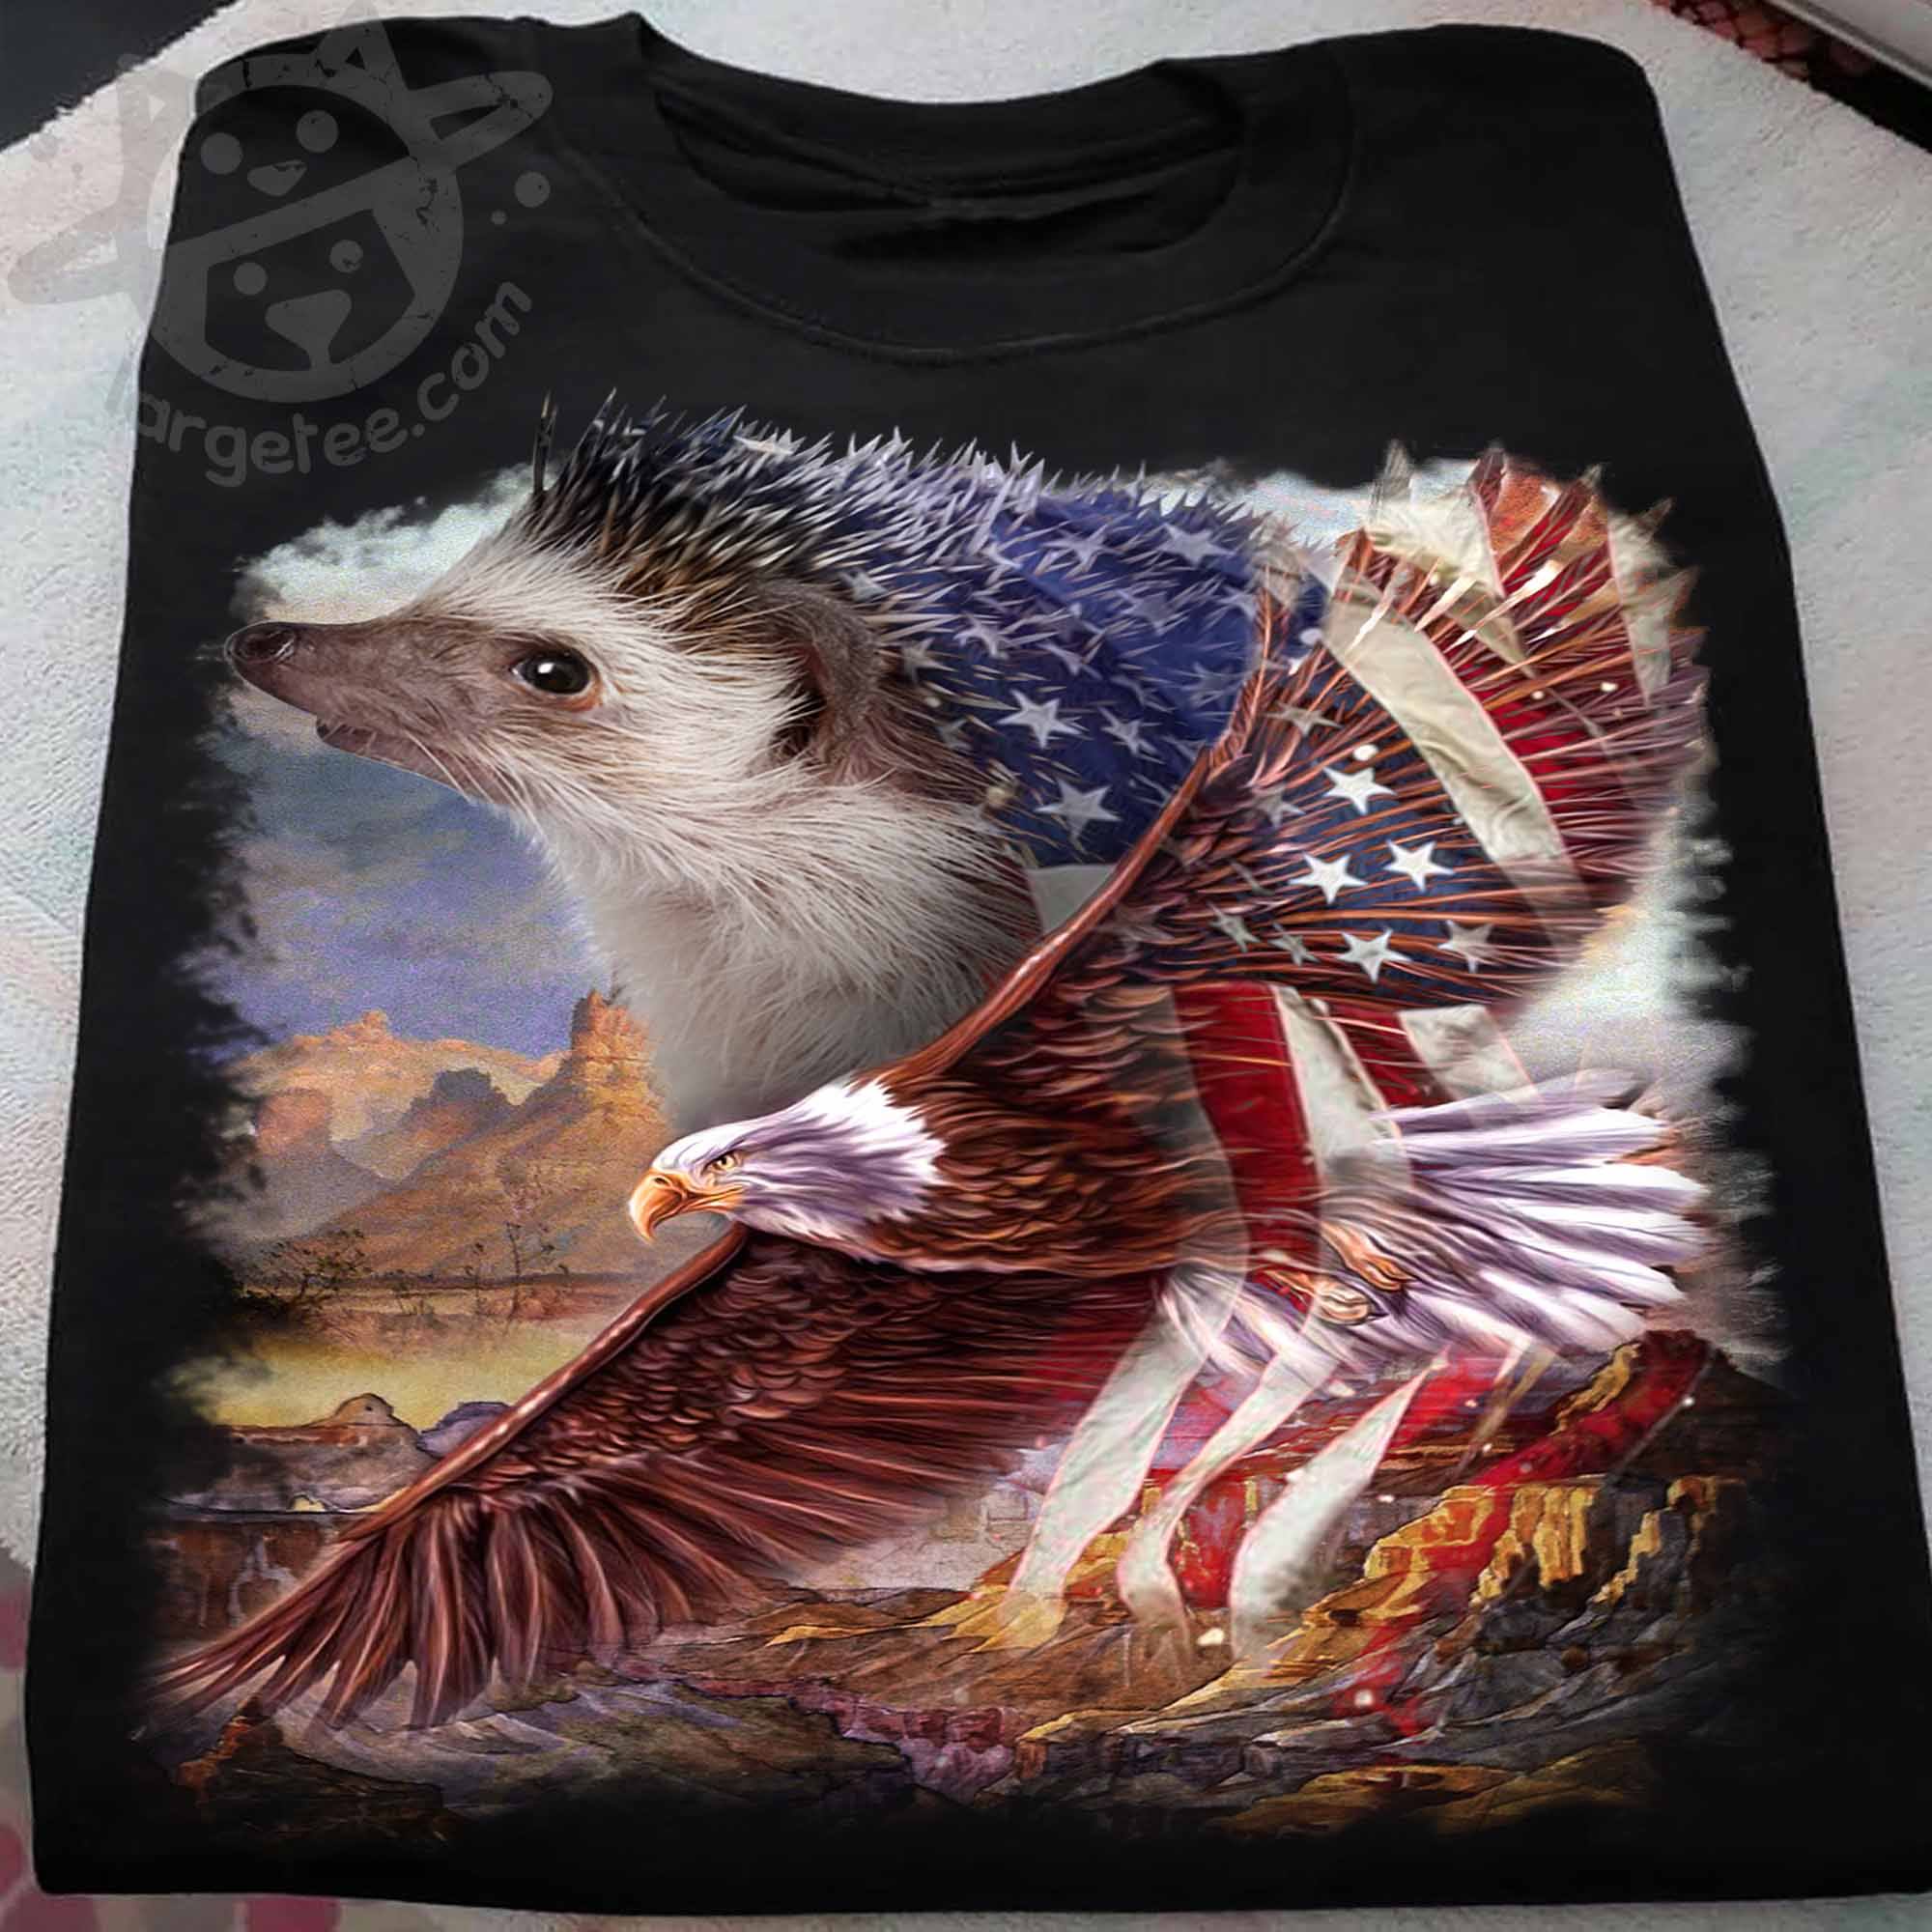 Hegdehog and eagle symbol of America